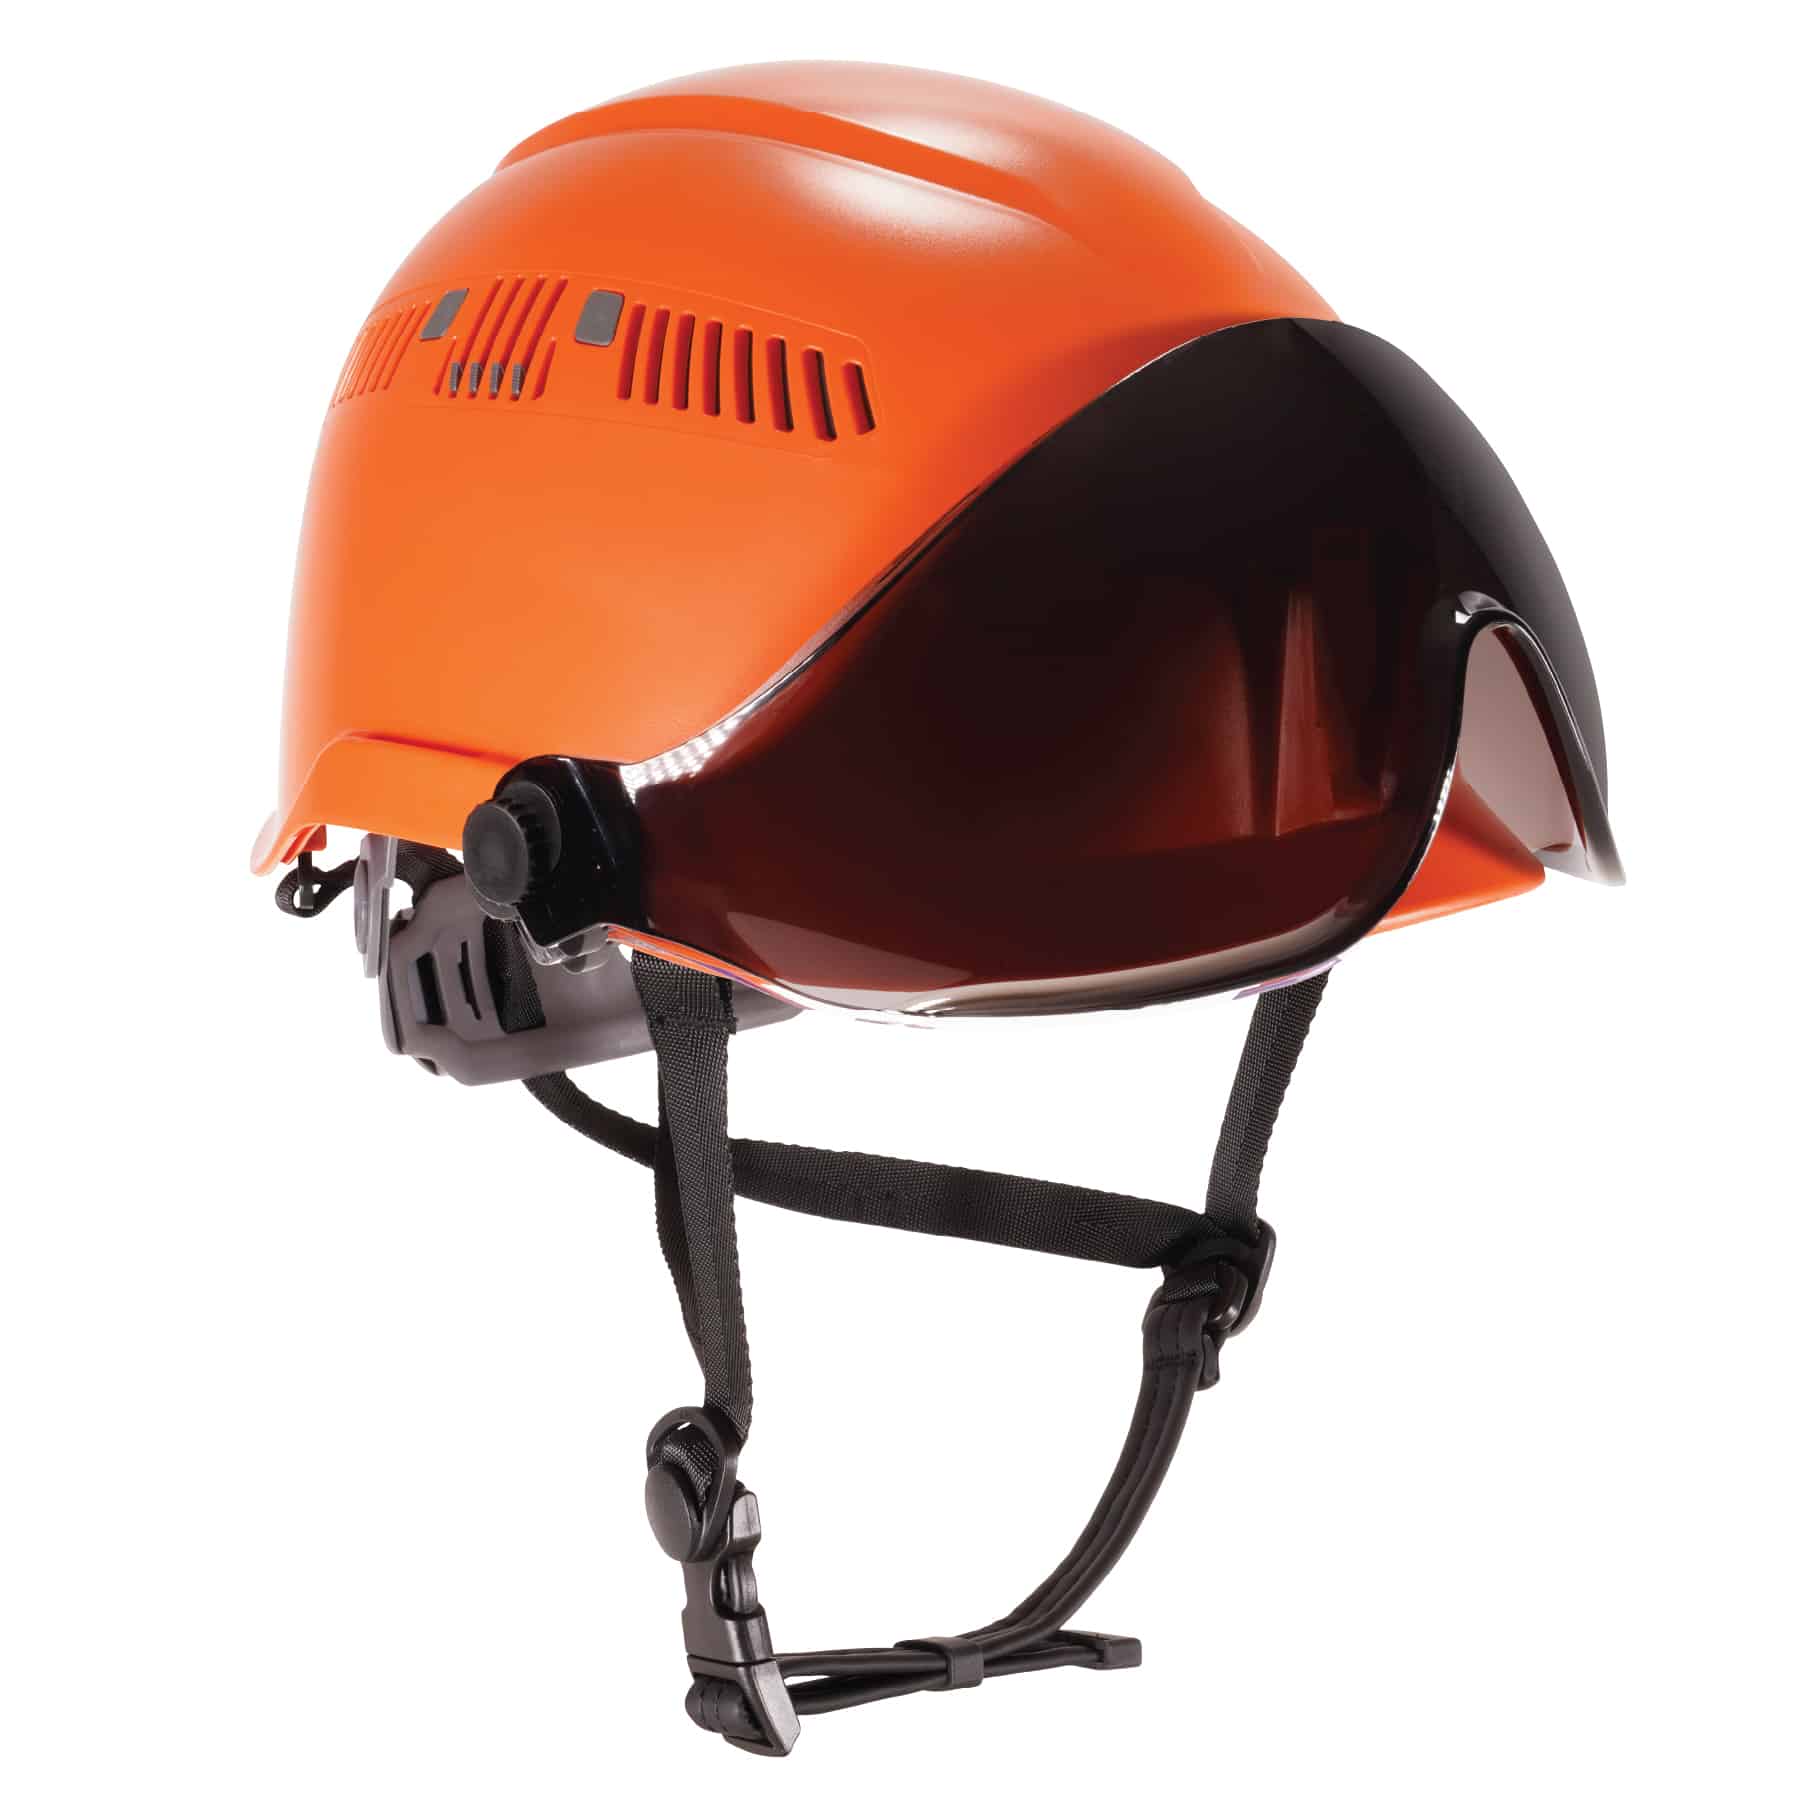 Orange safety helmet with dark visor attached to front